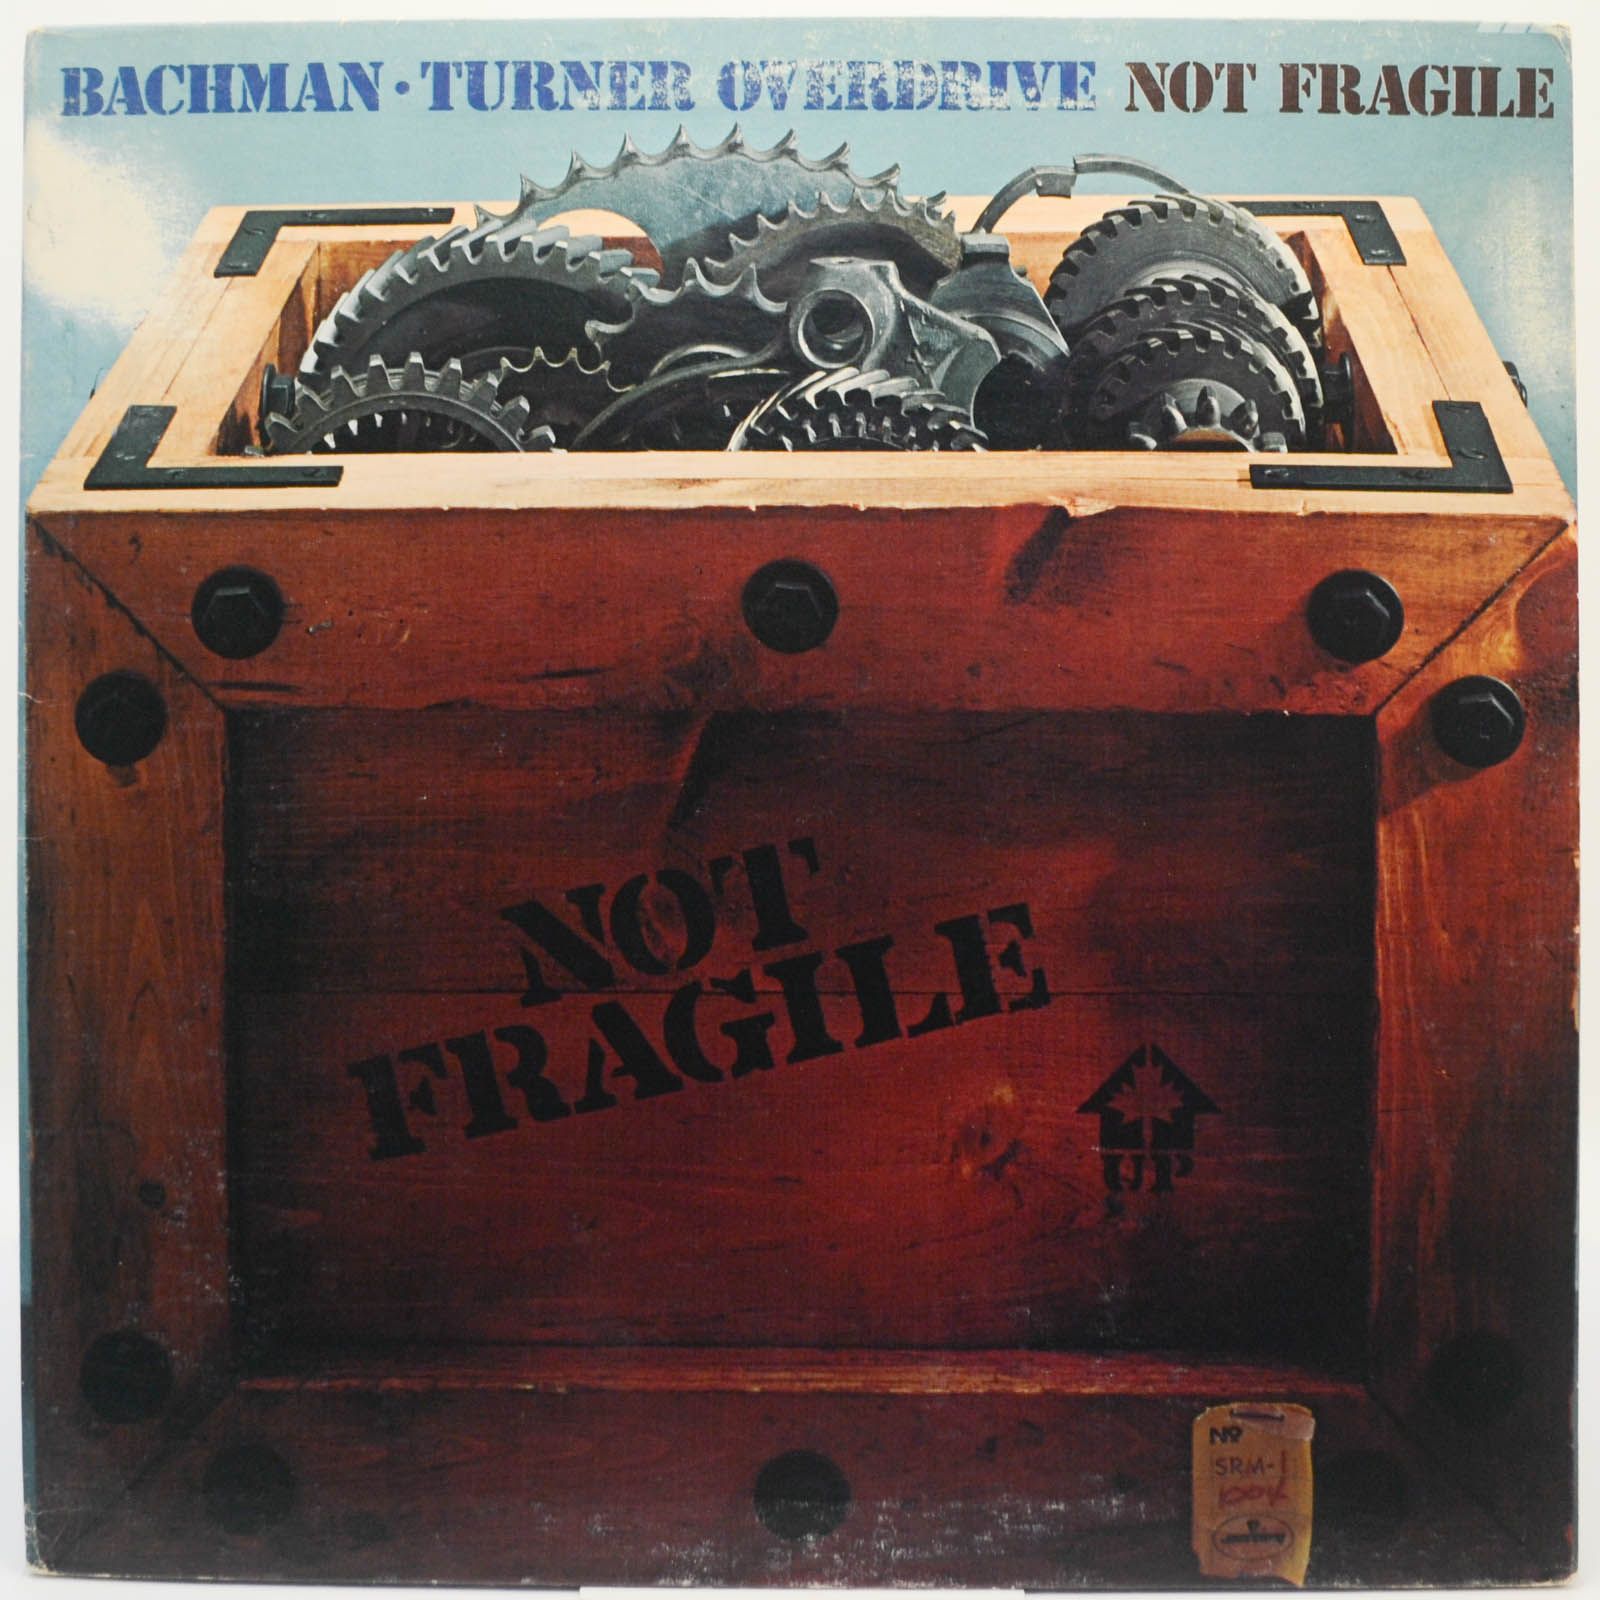 Bachman-Turner Overdrive — Not Fragile (USA), 1974